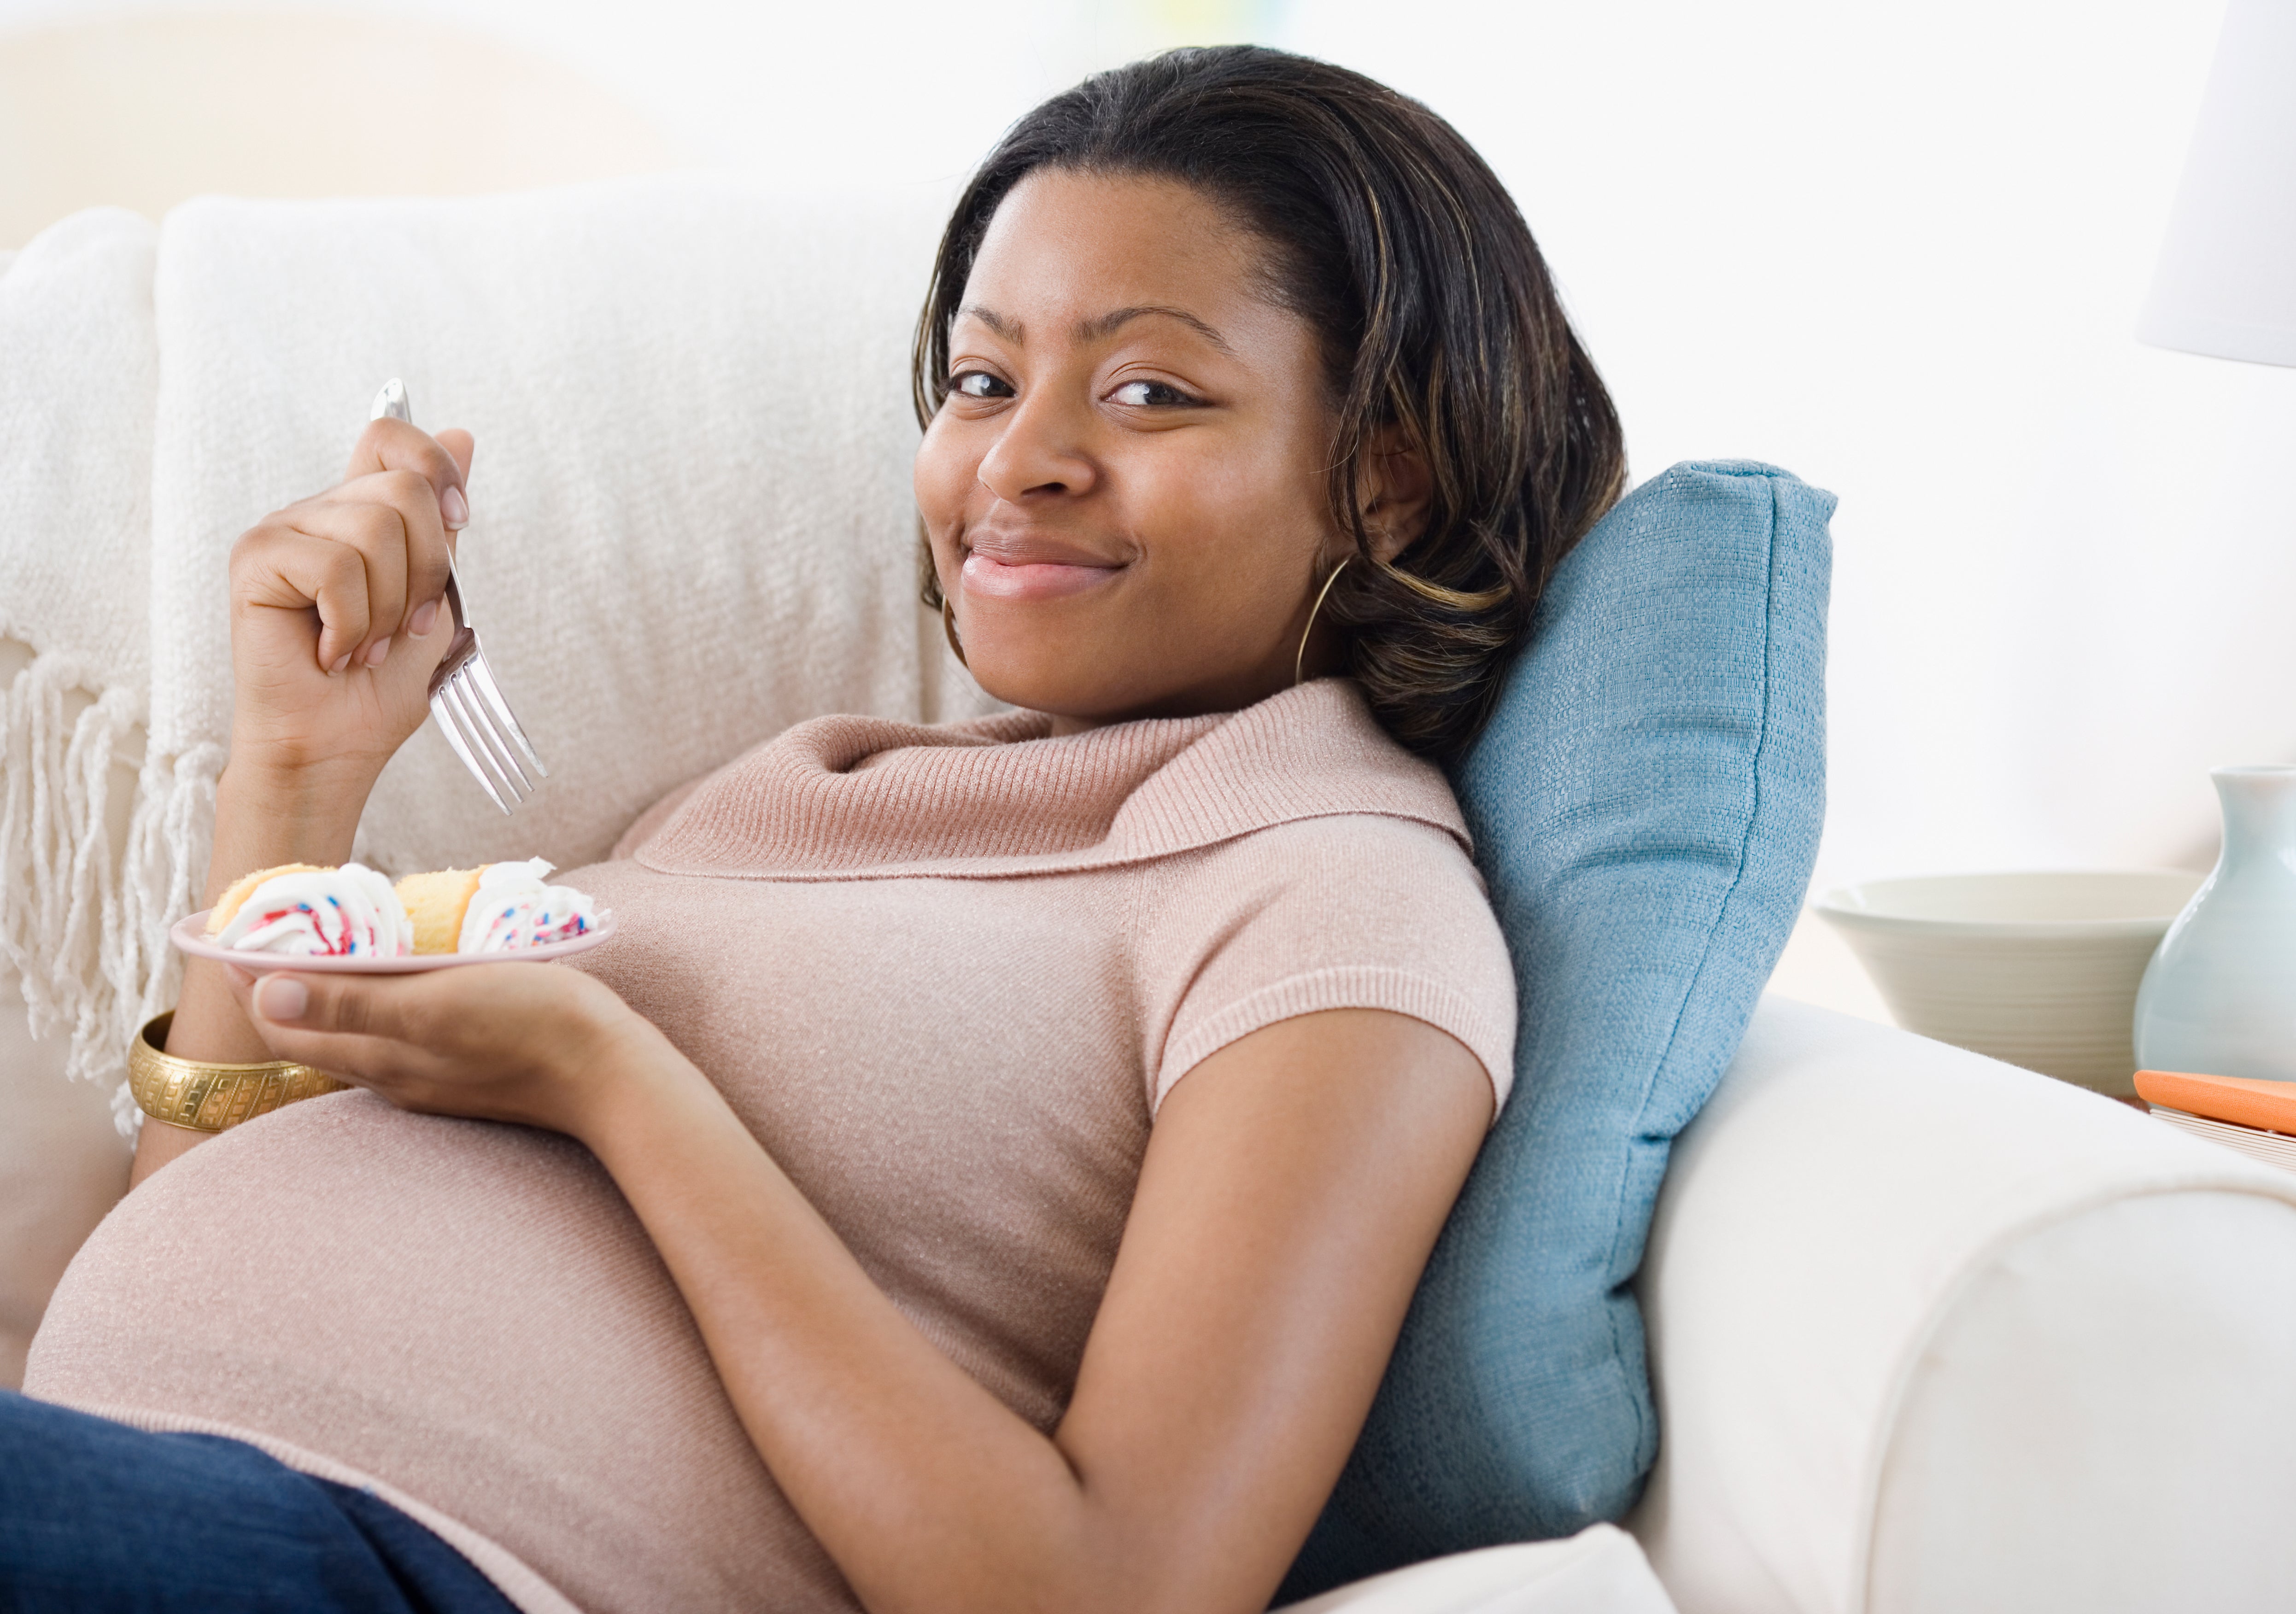 Pregnant Women Shouldn't 'Eat For Two,' Despite Myth
